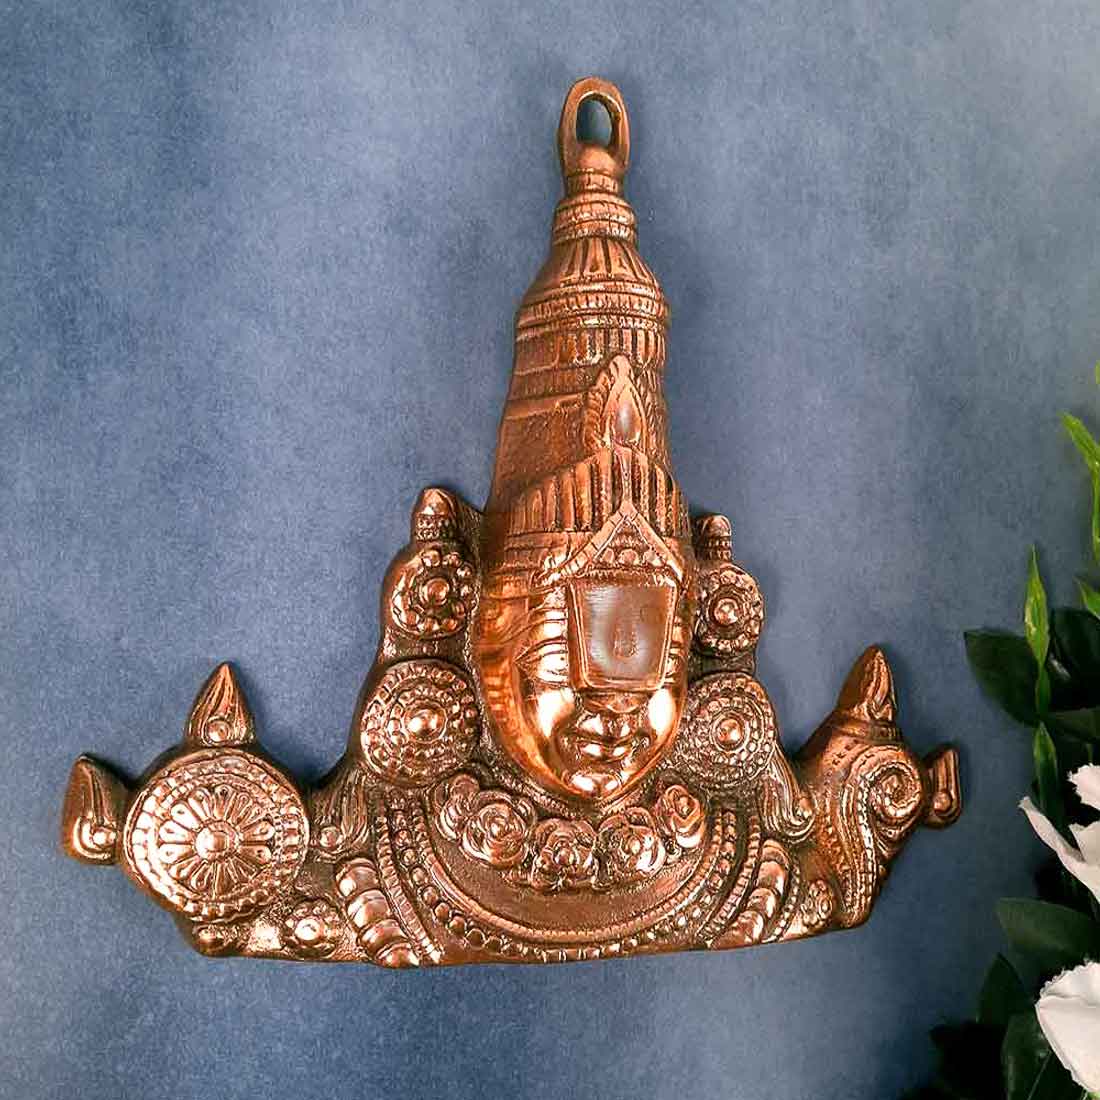 Sri Balaji Wall Hanging Idol | Venkateswara Swami Wall Statue | Tirupati Balaji Wall Hanging Murti | Religious & Spiritual Sculpture - for Gift, Home, Living Room, Office, Puja Room Decoration   - 12 Inch